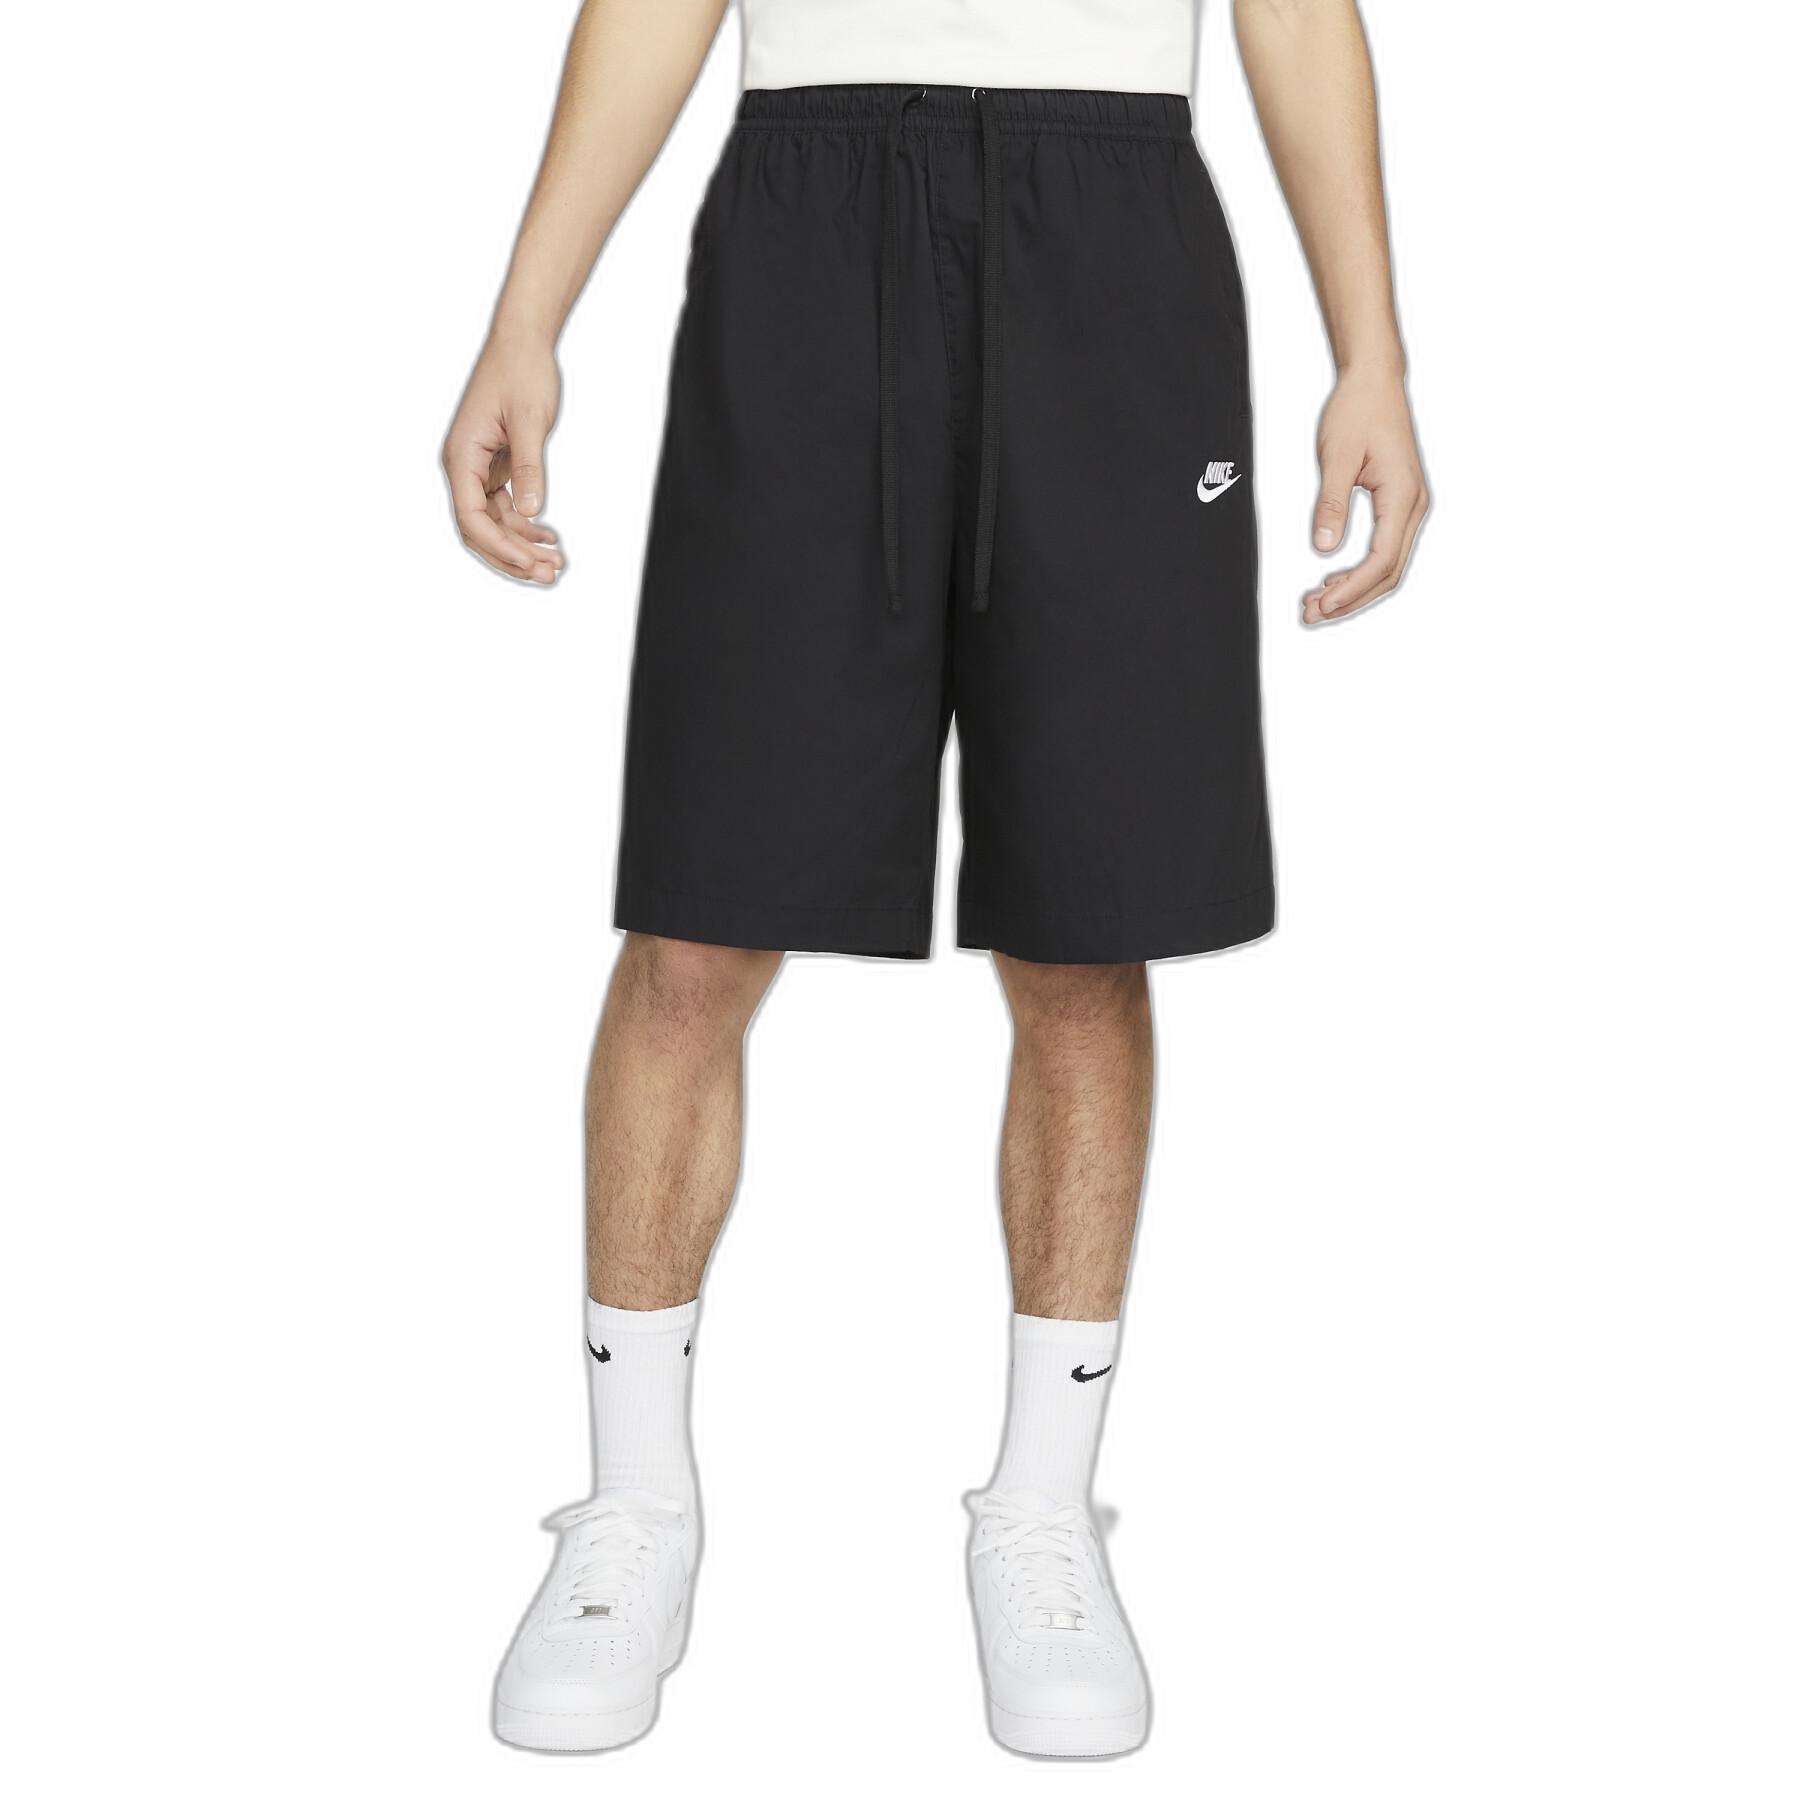 Oversized shorts Nike Club - Shorts - Textile - Handball wear